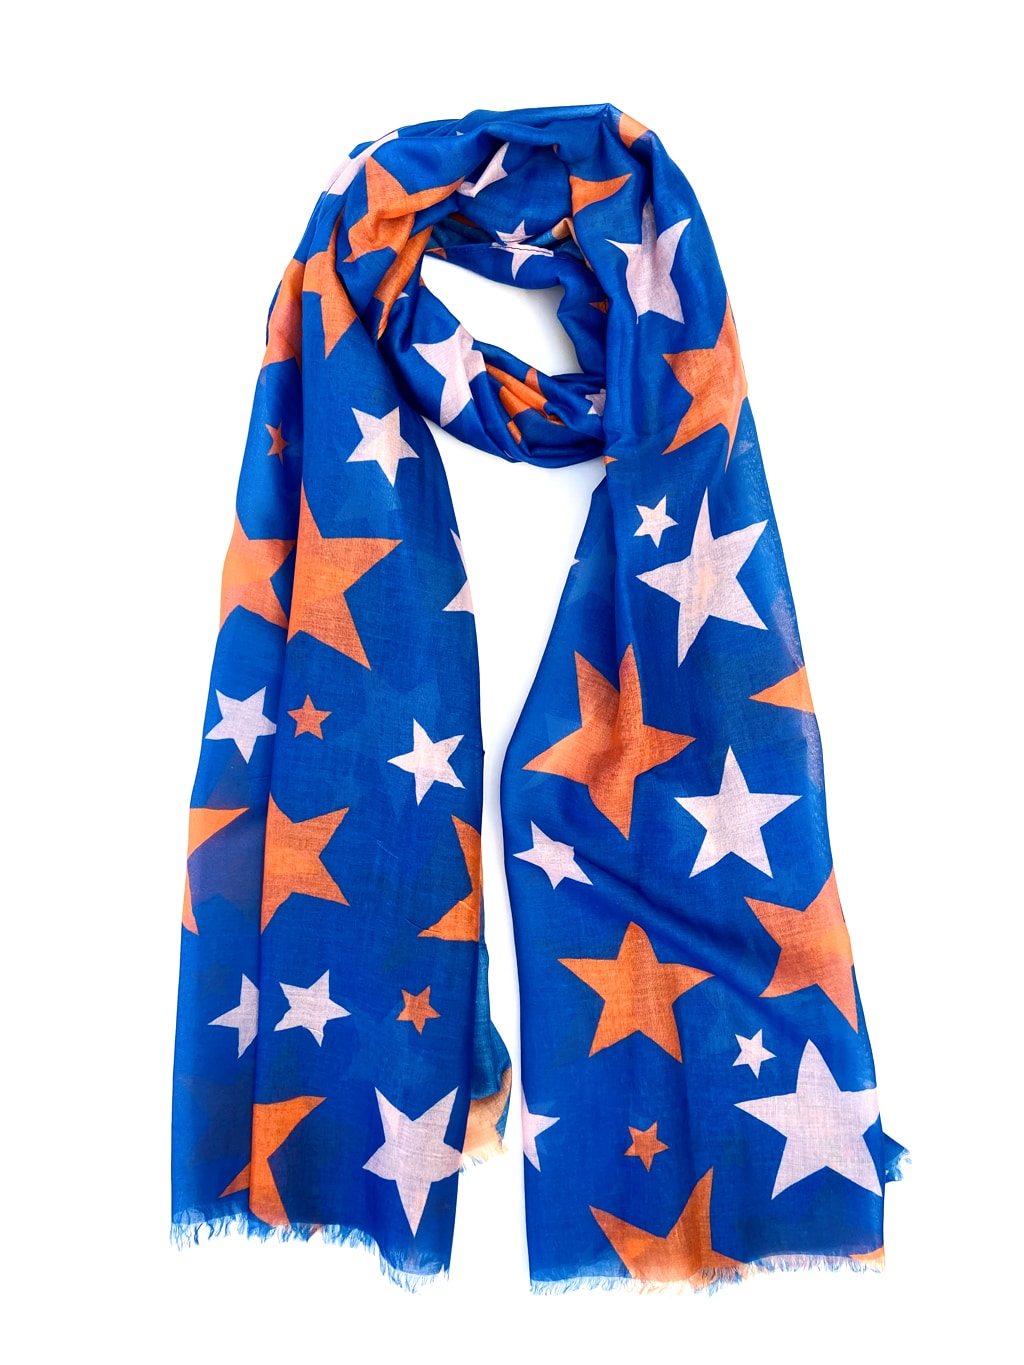 blue and orange star scarf full length